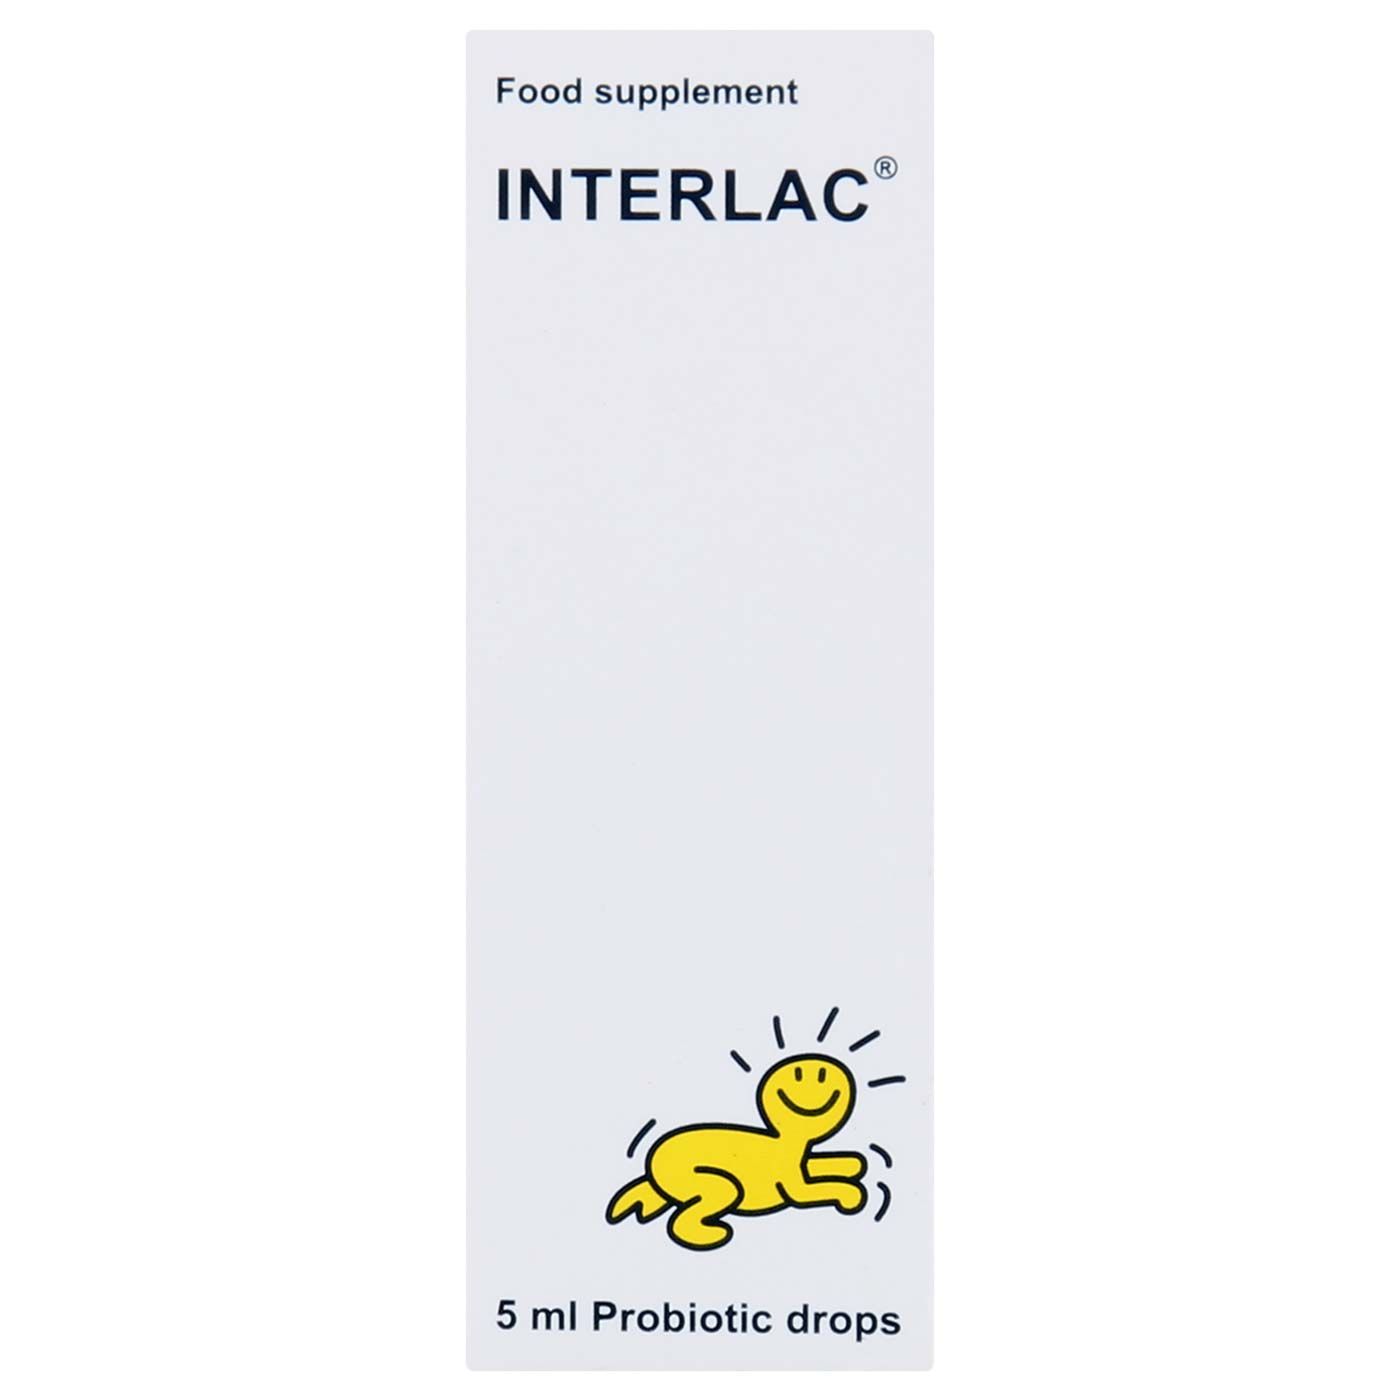 BioGaia Interlac Probiotic Drops 5mL - 3